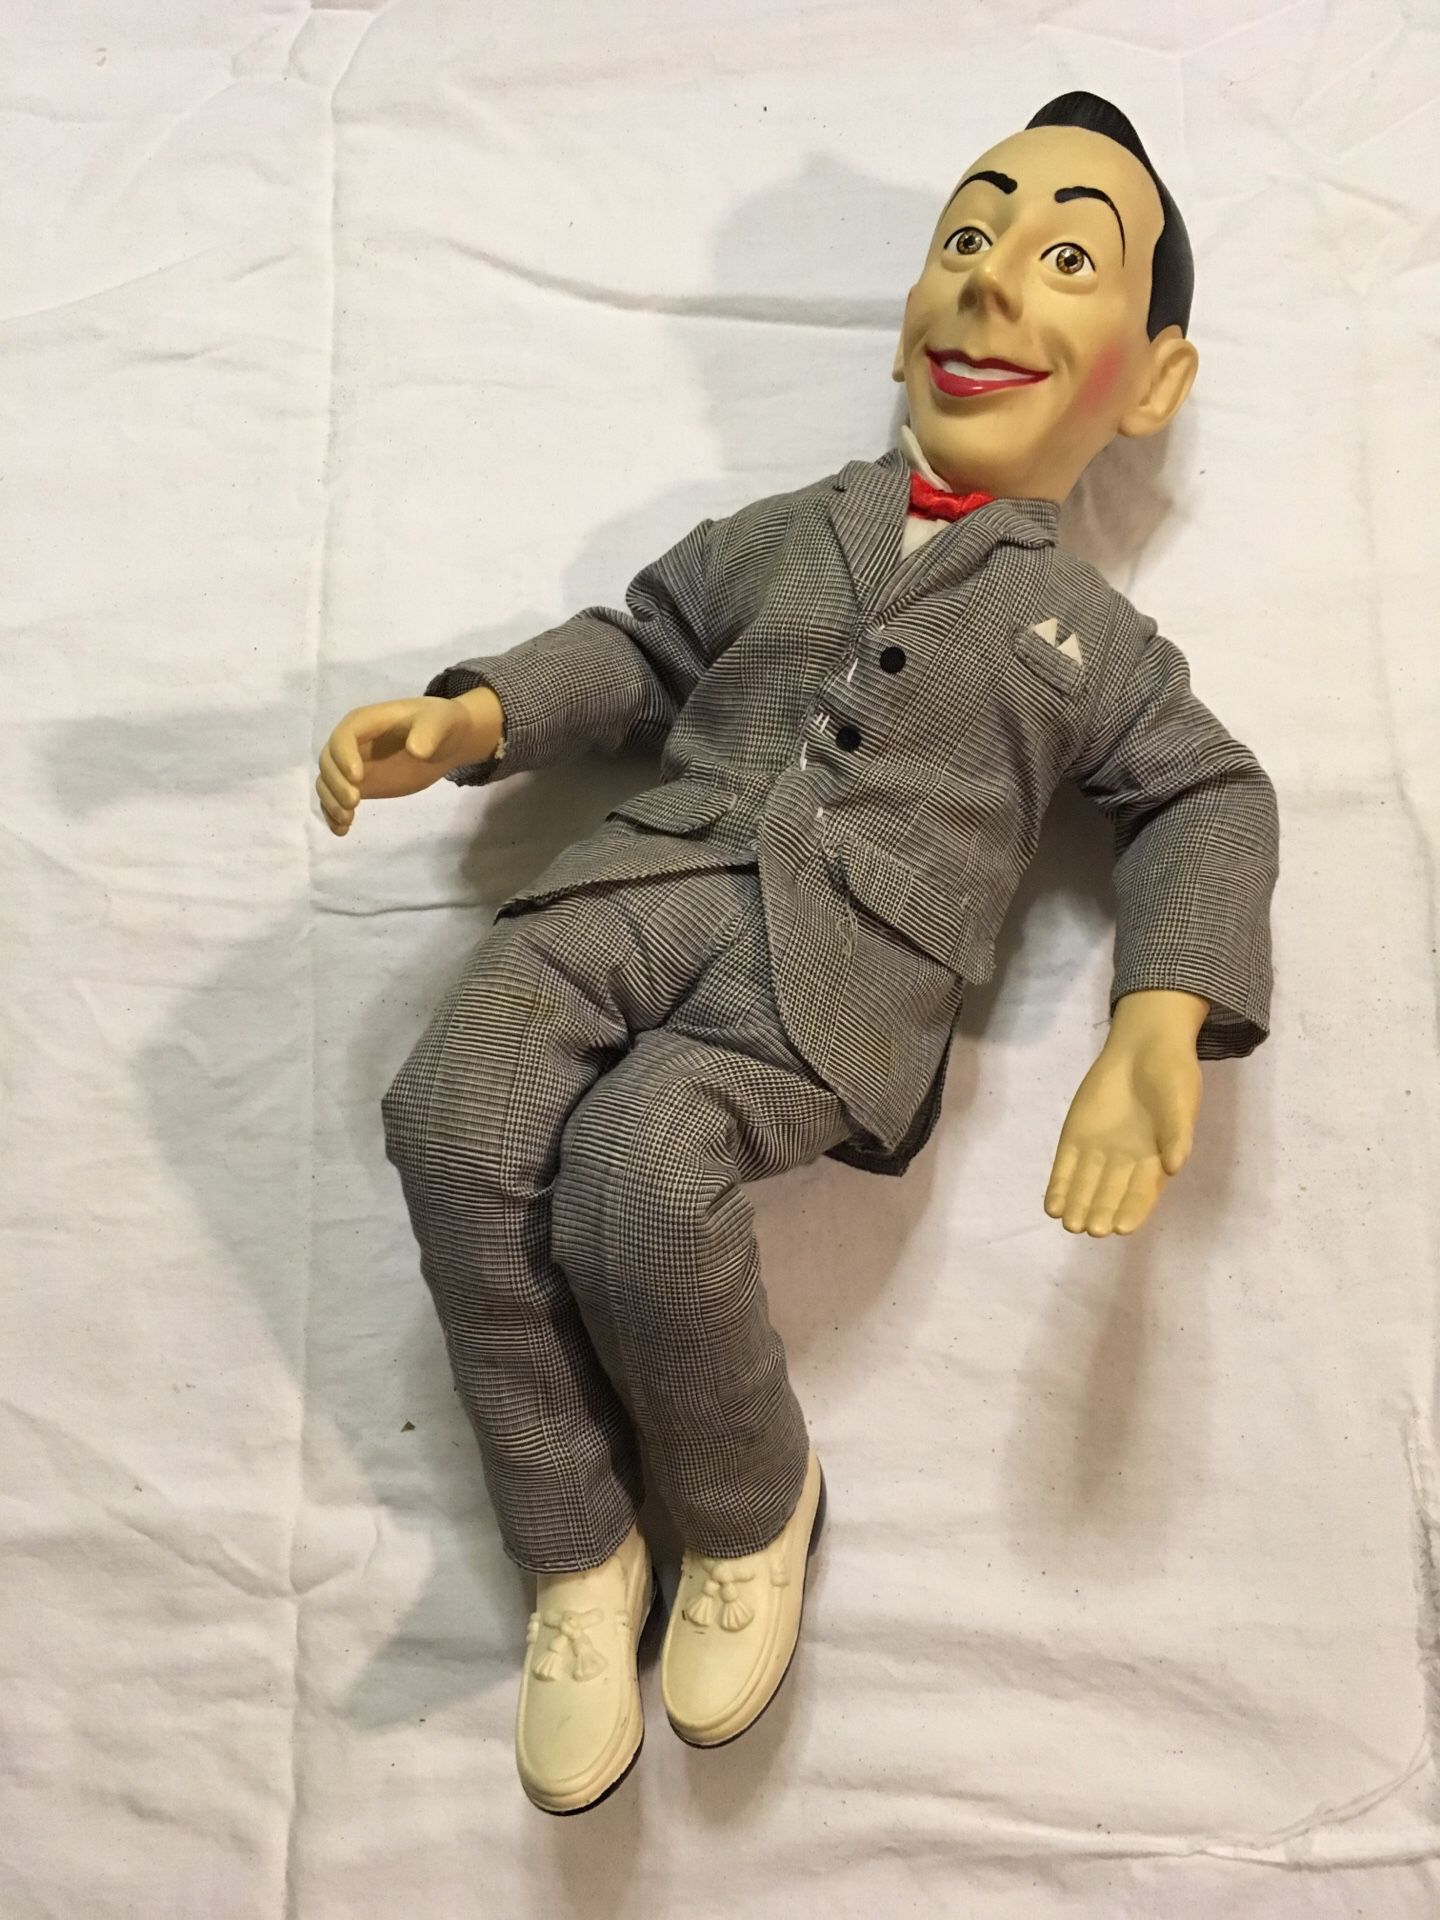 Pee Wee Herman Doll from 1987